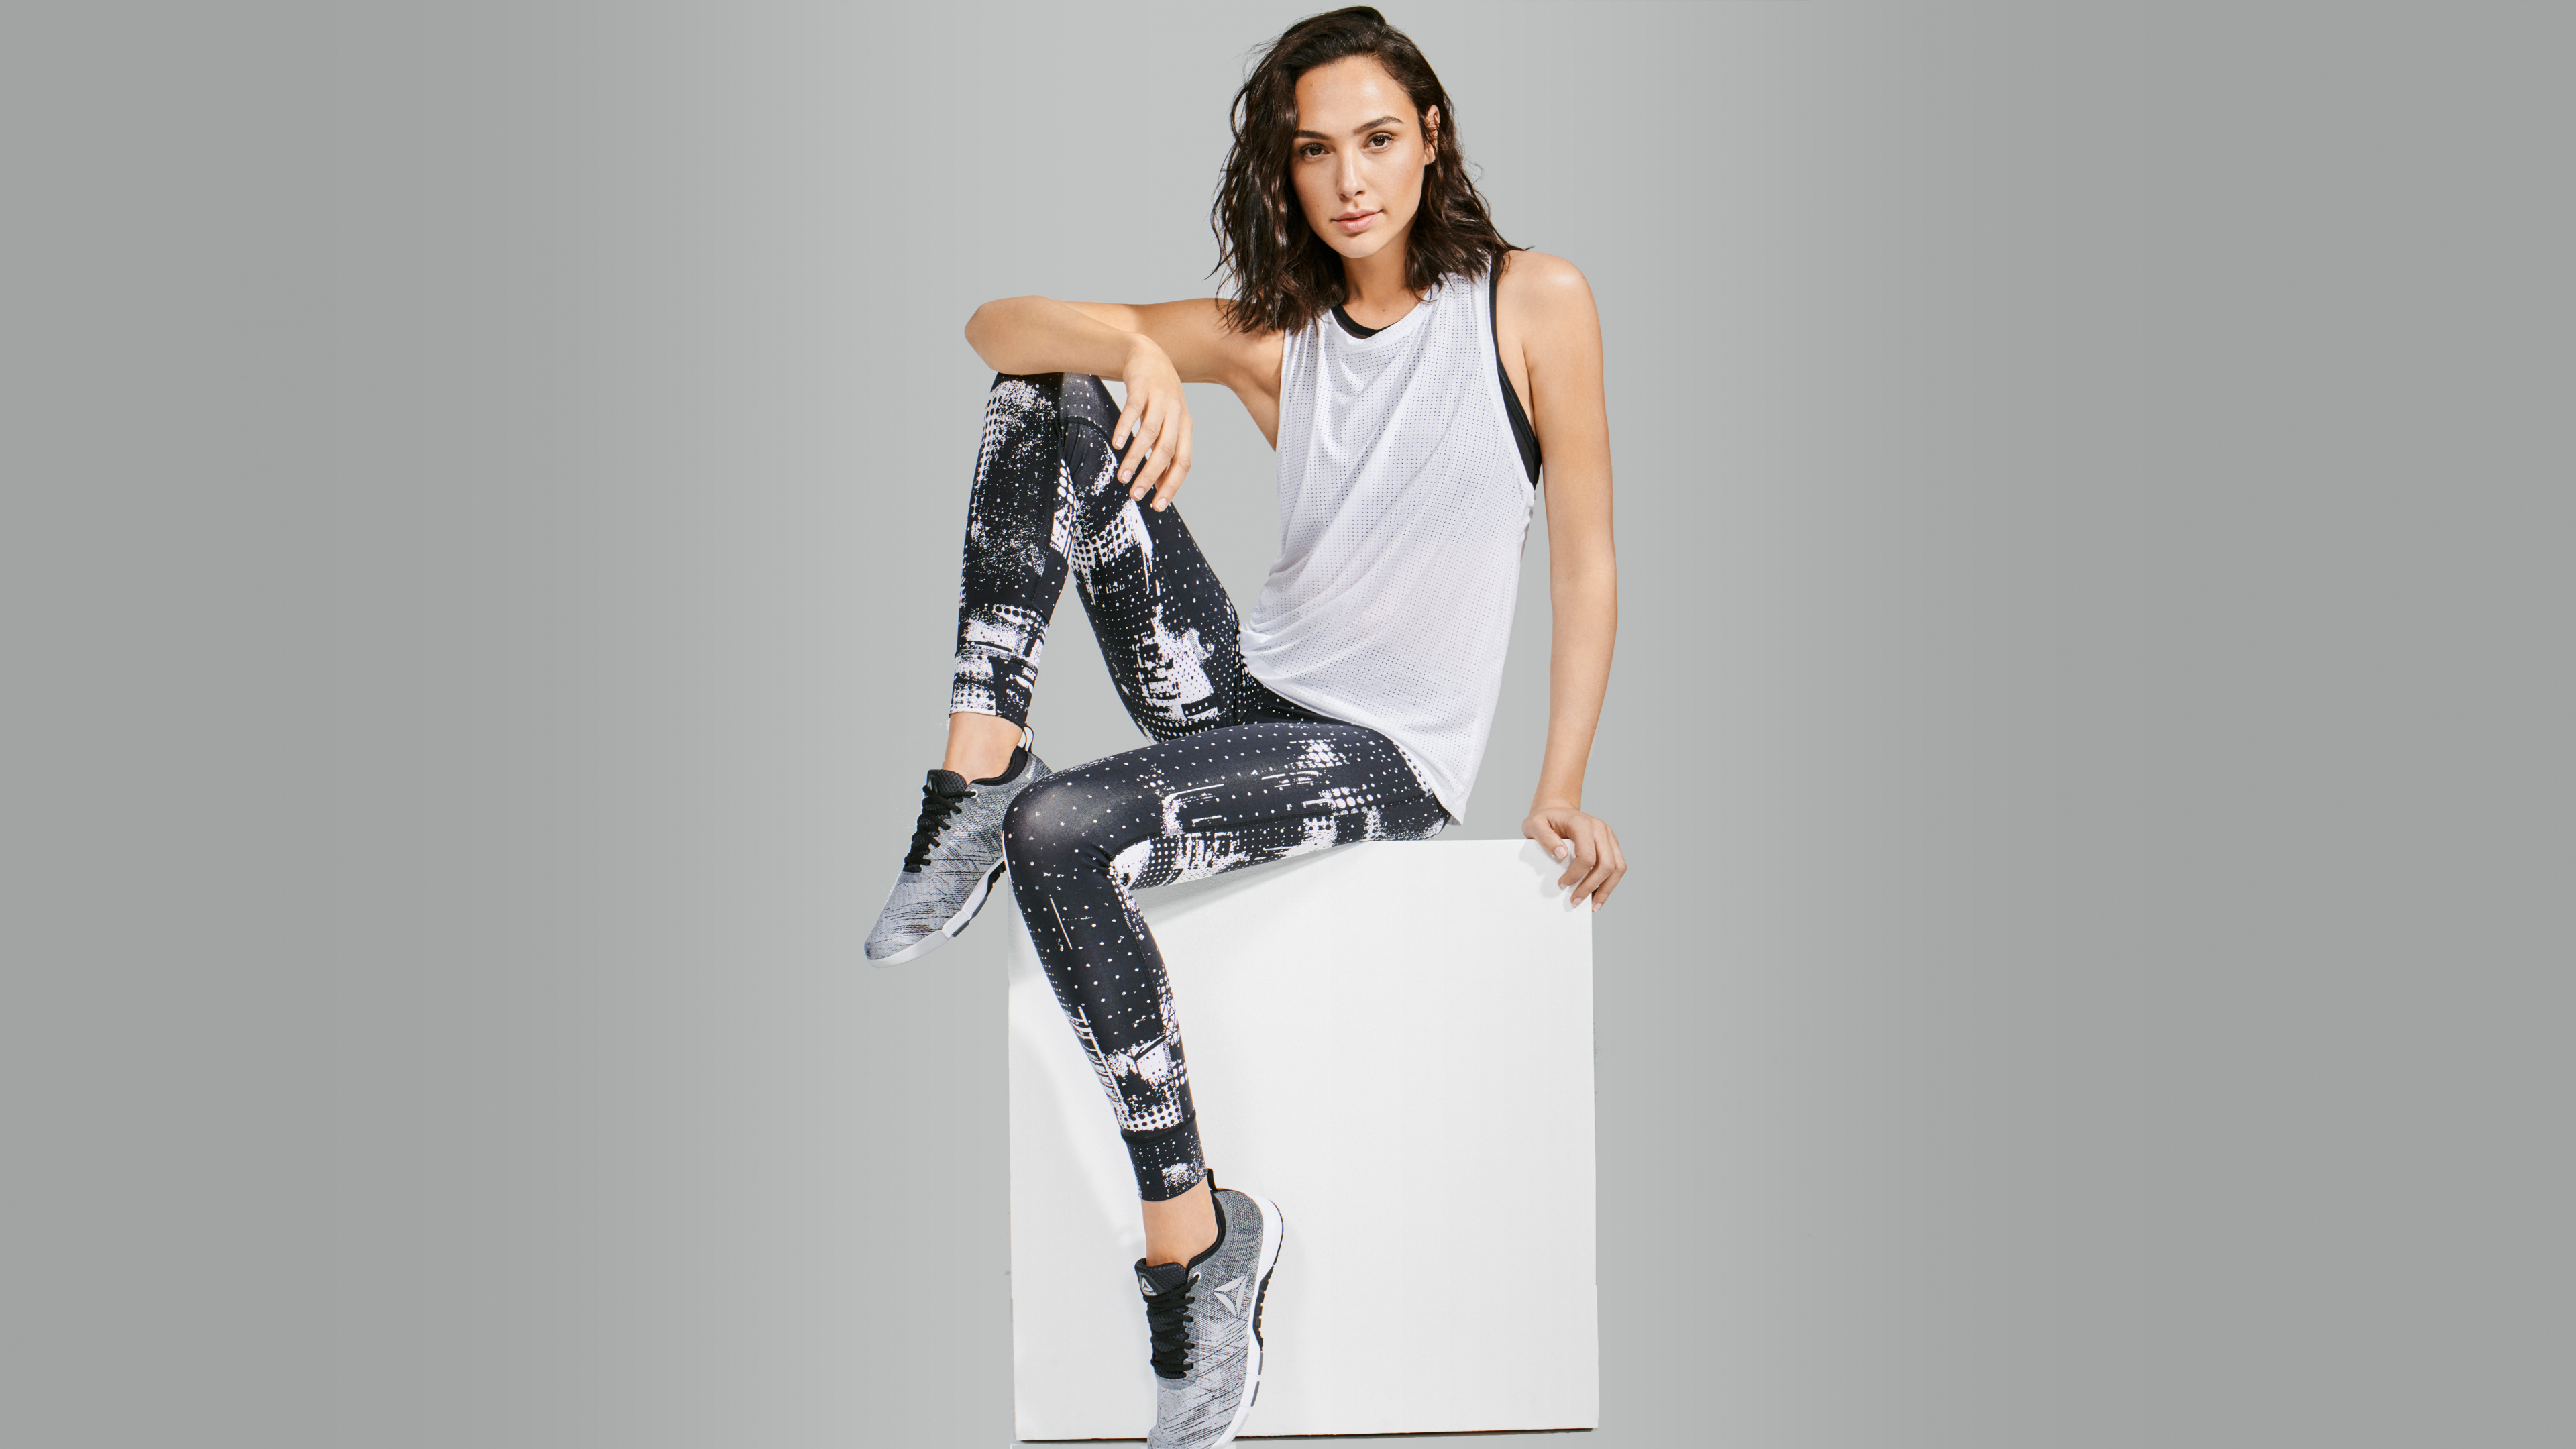 Reebok: Gal Gadot campaign, 2018, A global athletic footwear and apparel company. 3840x2160 4K Wallpaper.